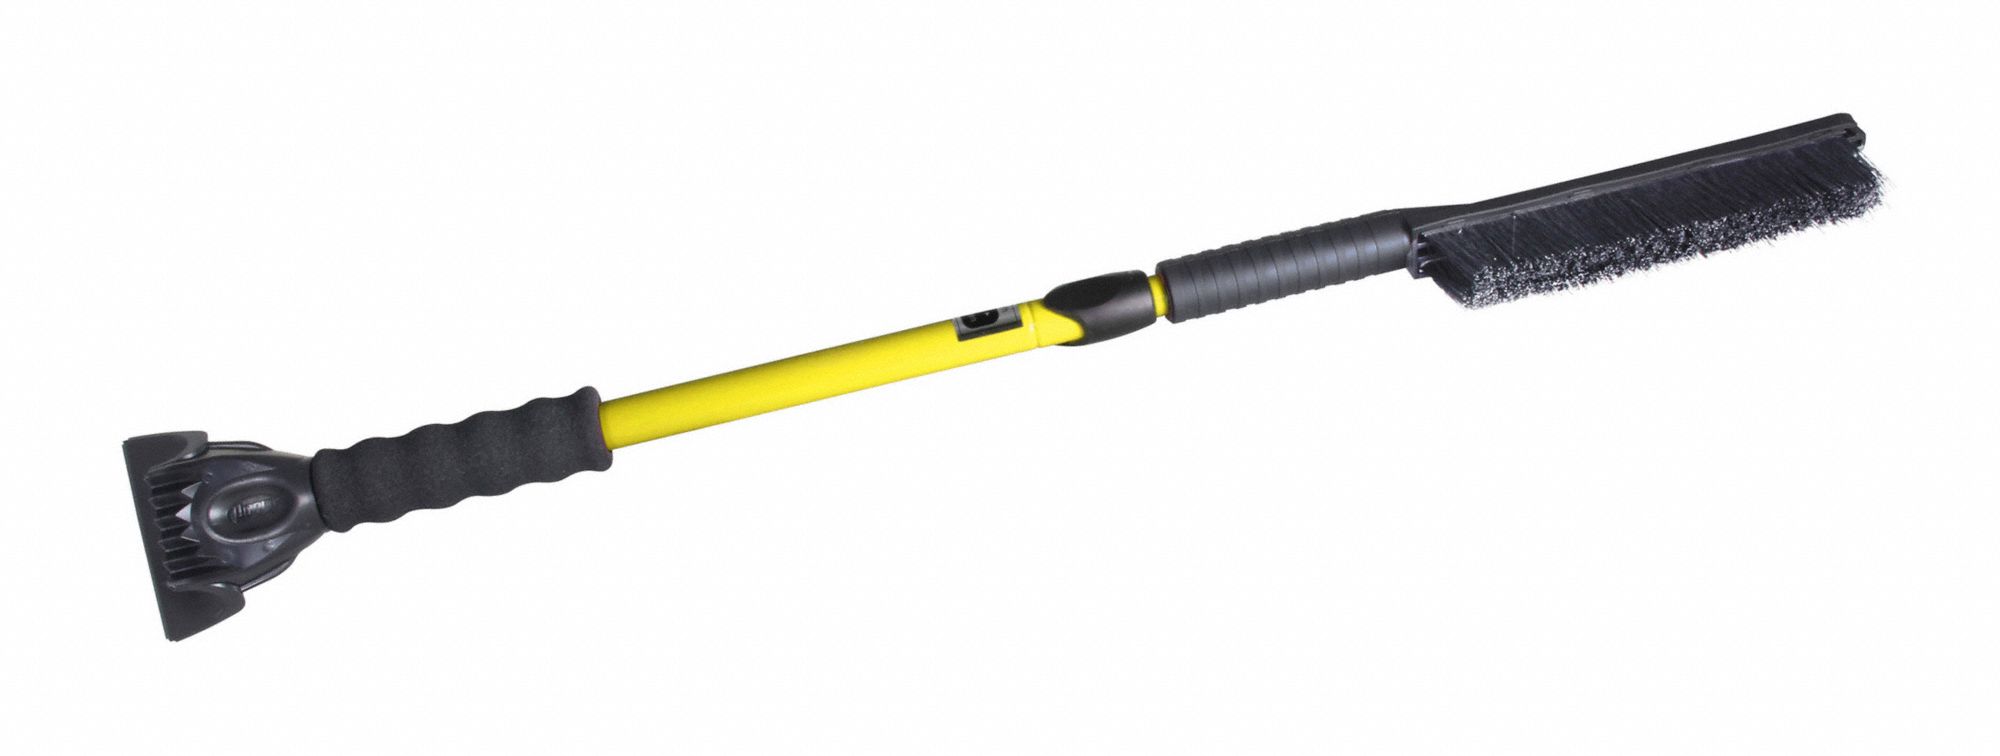 Snow Broom: Telescopic Handle, 8 1/2 in Brush Head Wd, 42 in Handle Lg